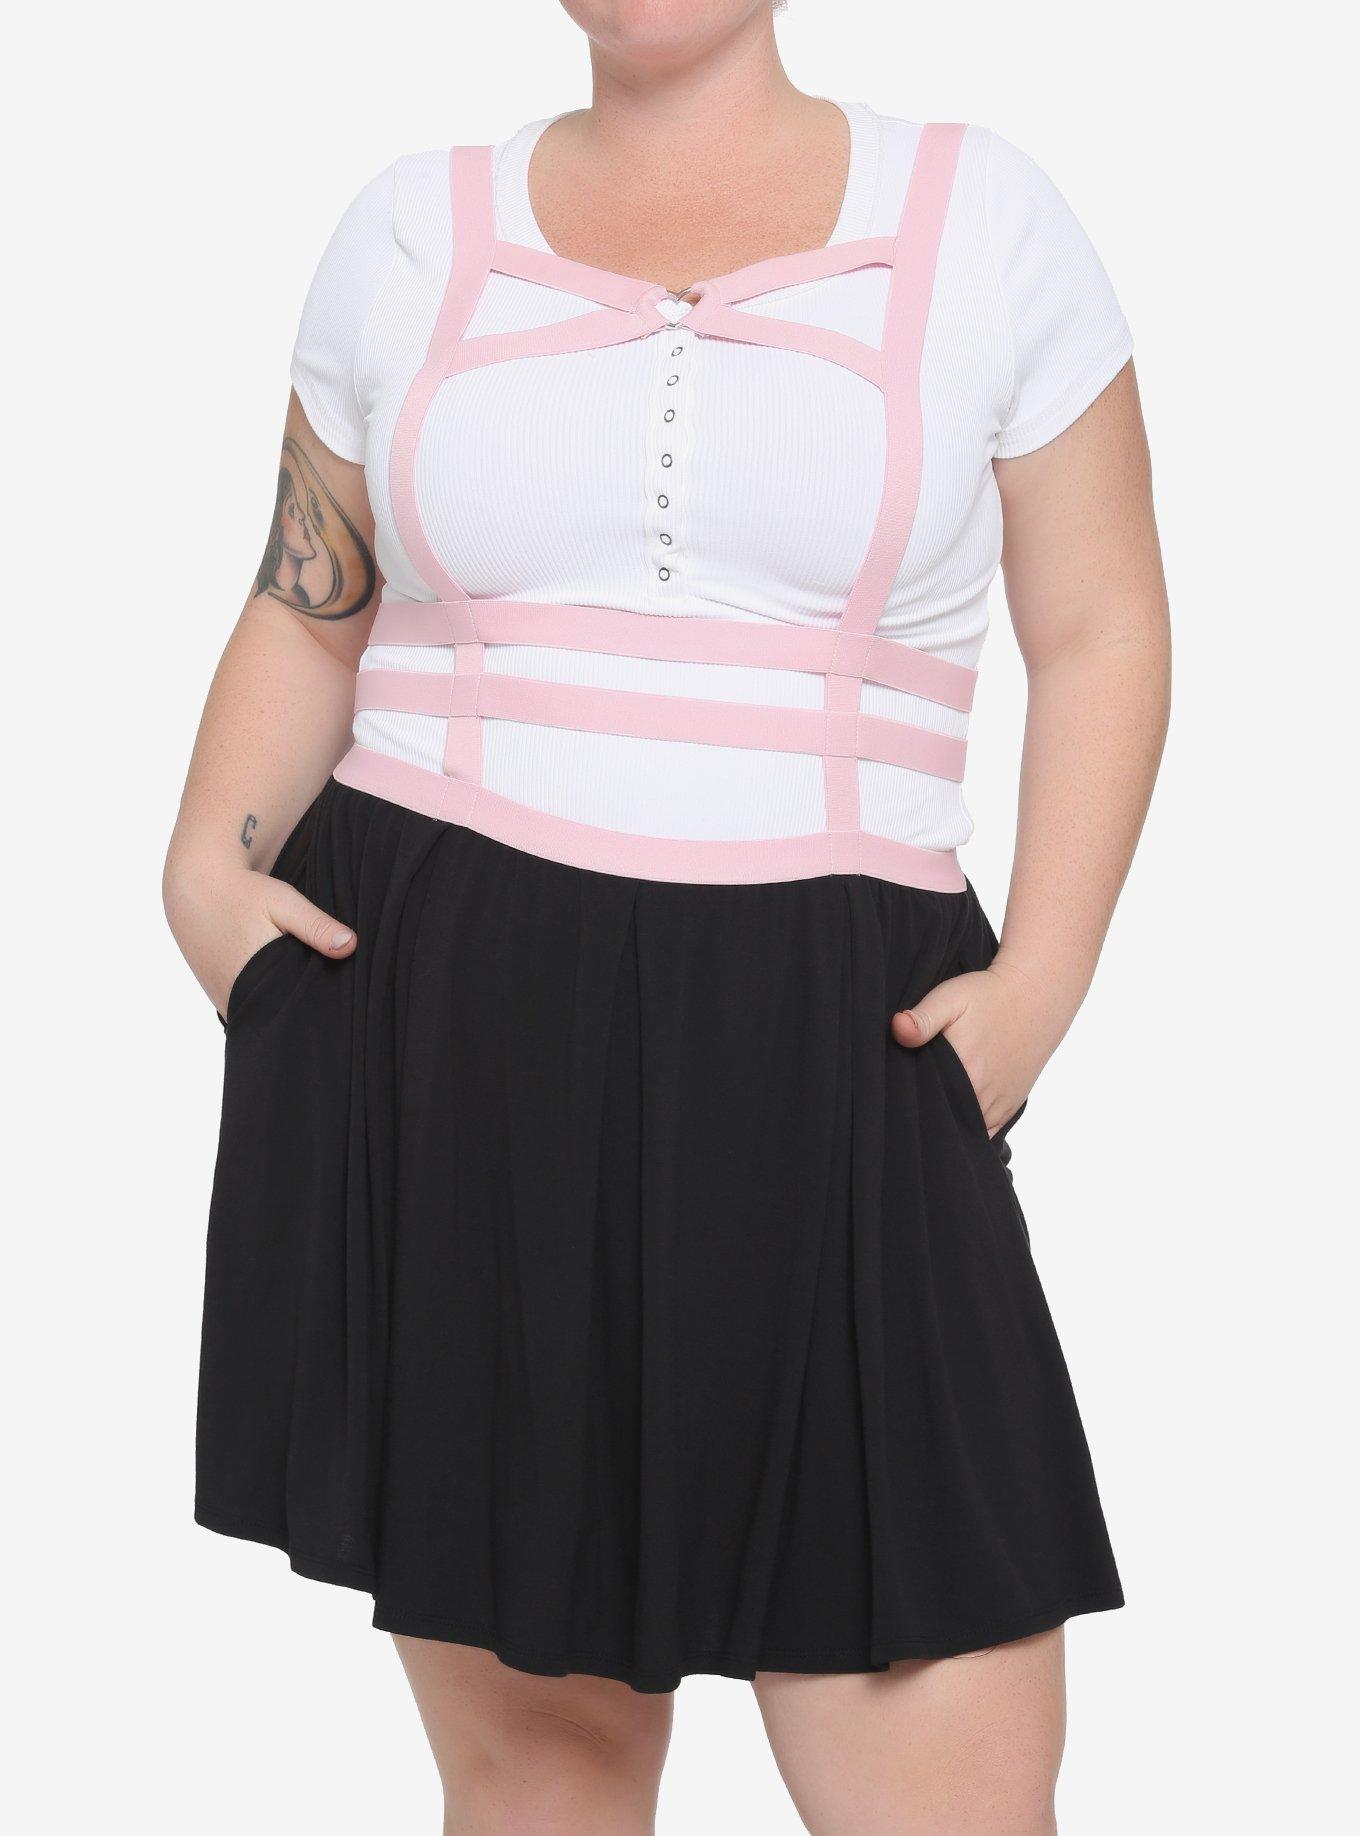 Black u0026 Pink Heart Harness Suspender Skirt Plus Size